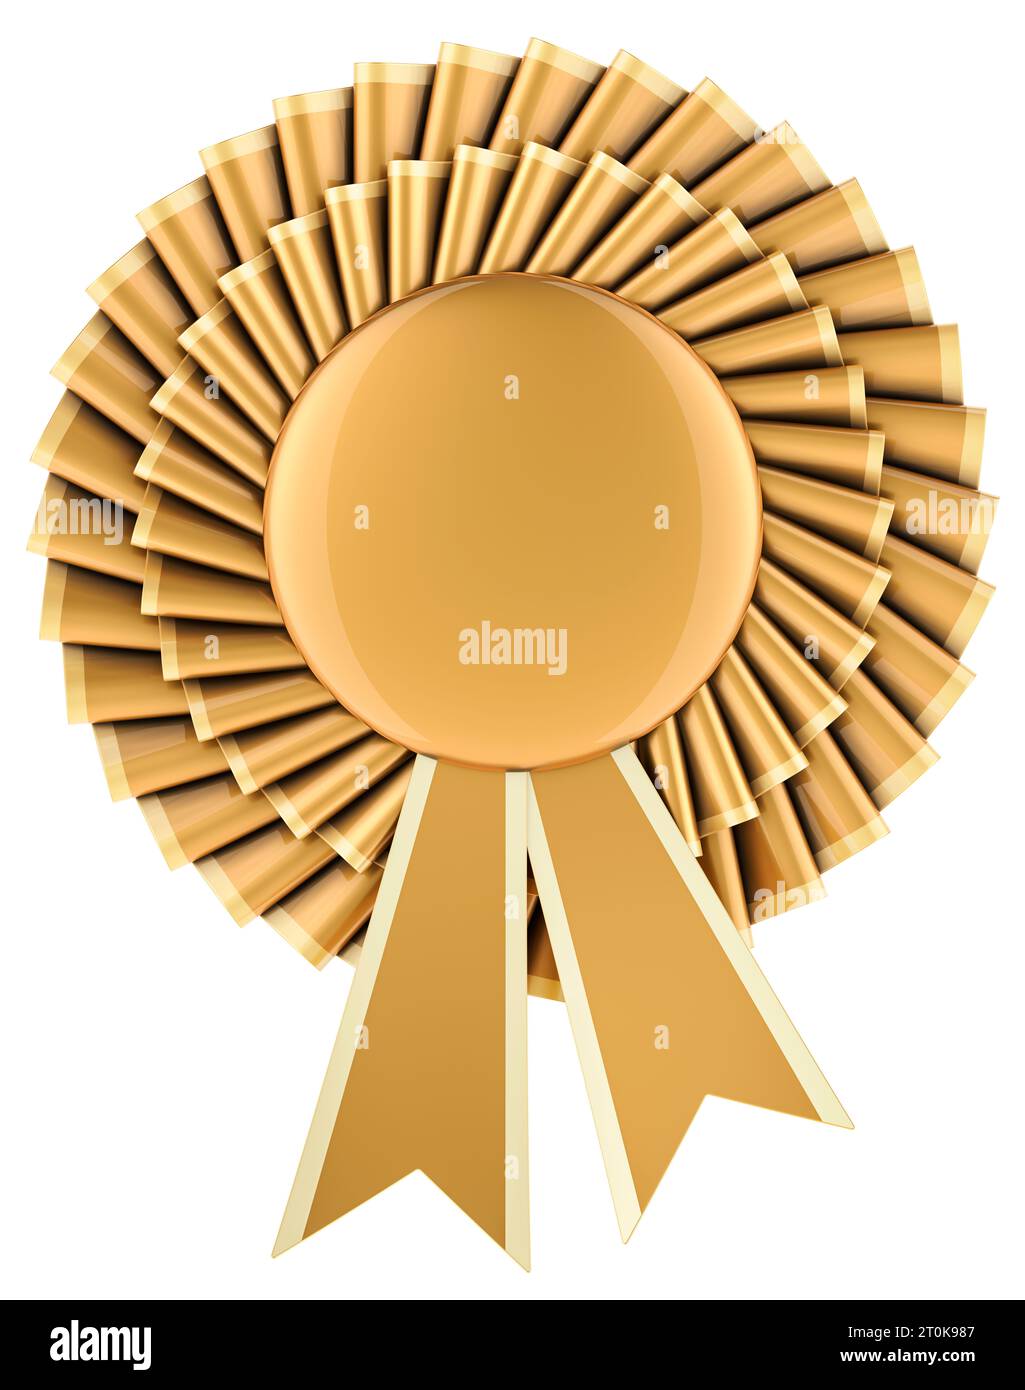 Silver ribbon award hi-res stock photography and images - Alamy